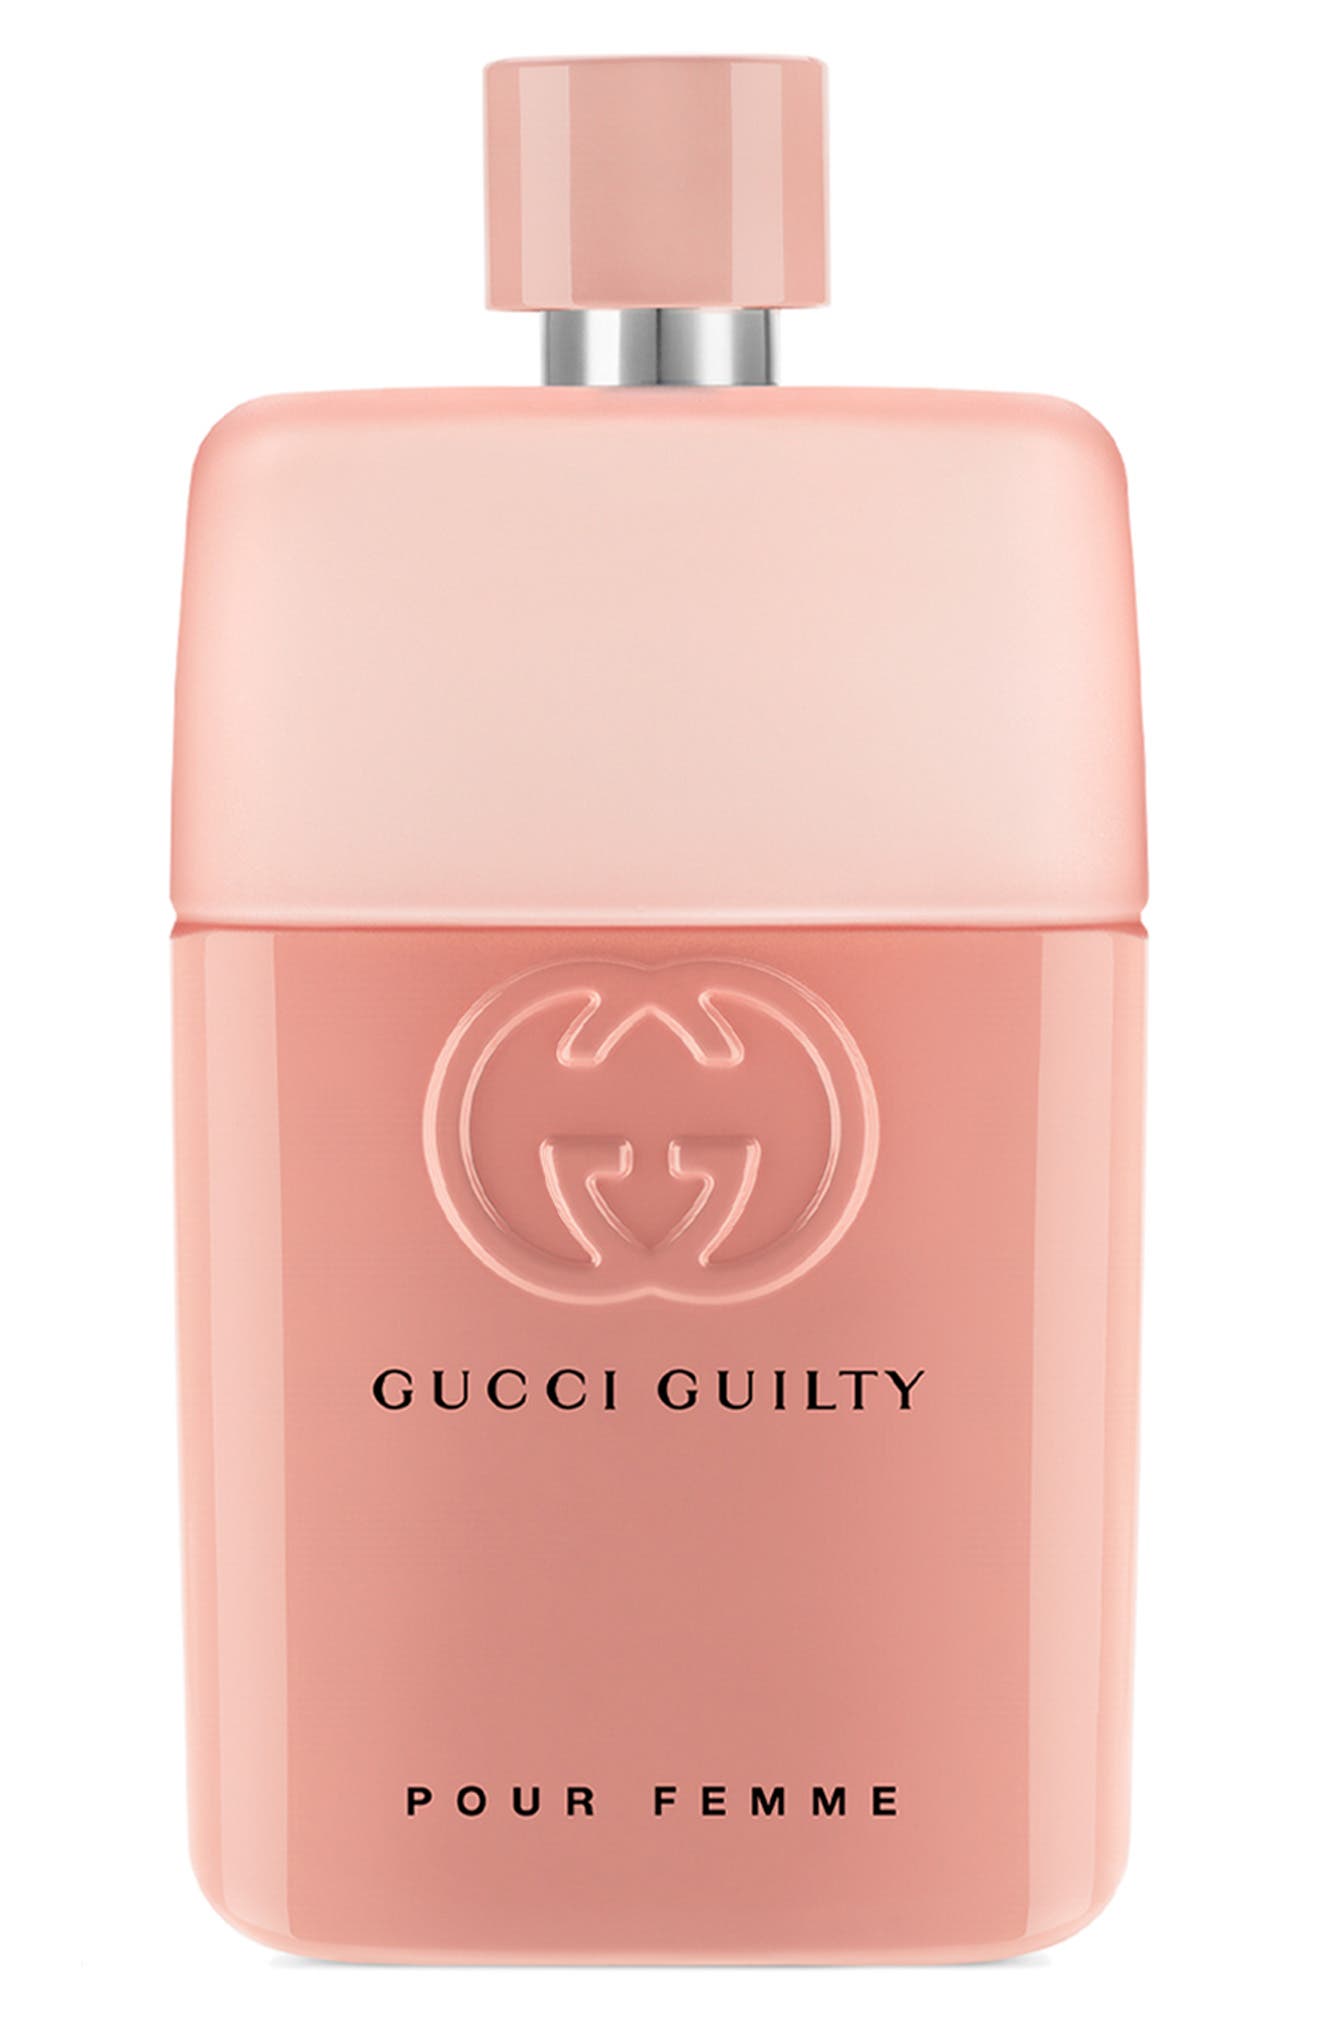 givenchy guilty perfume